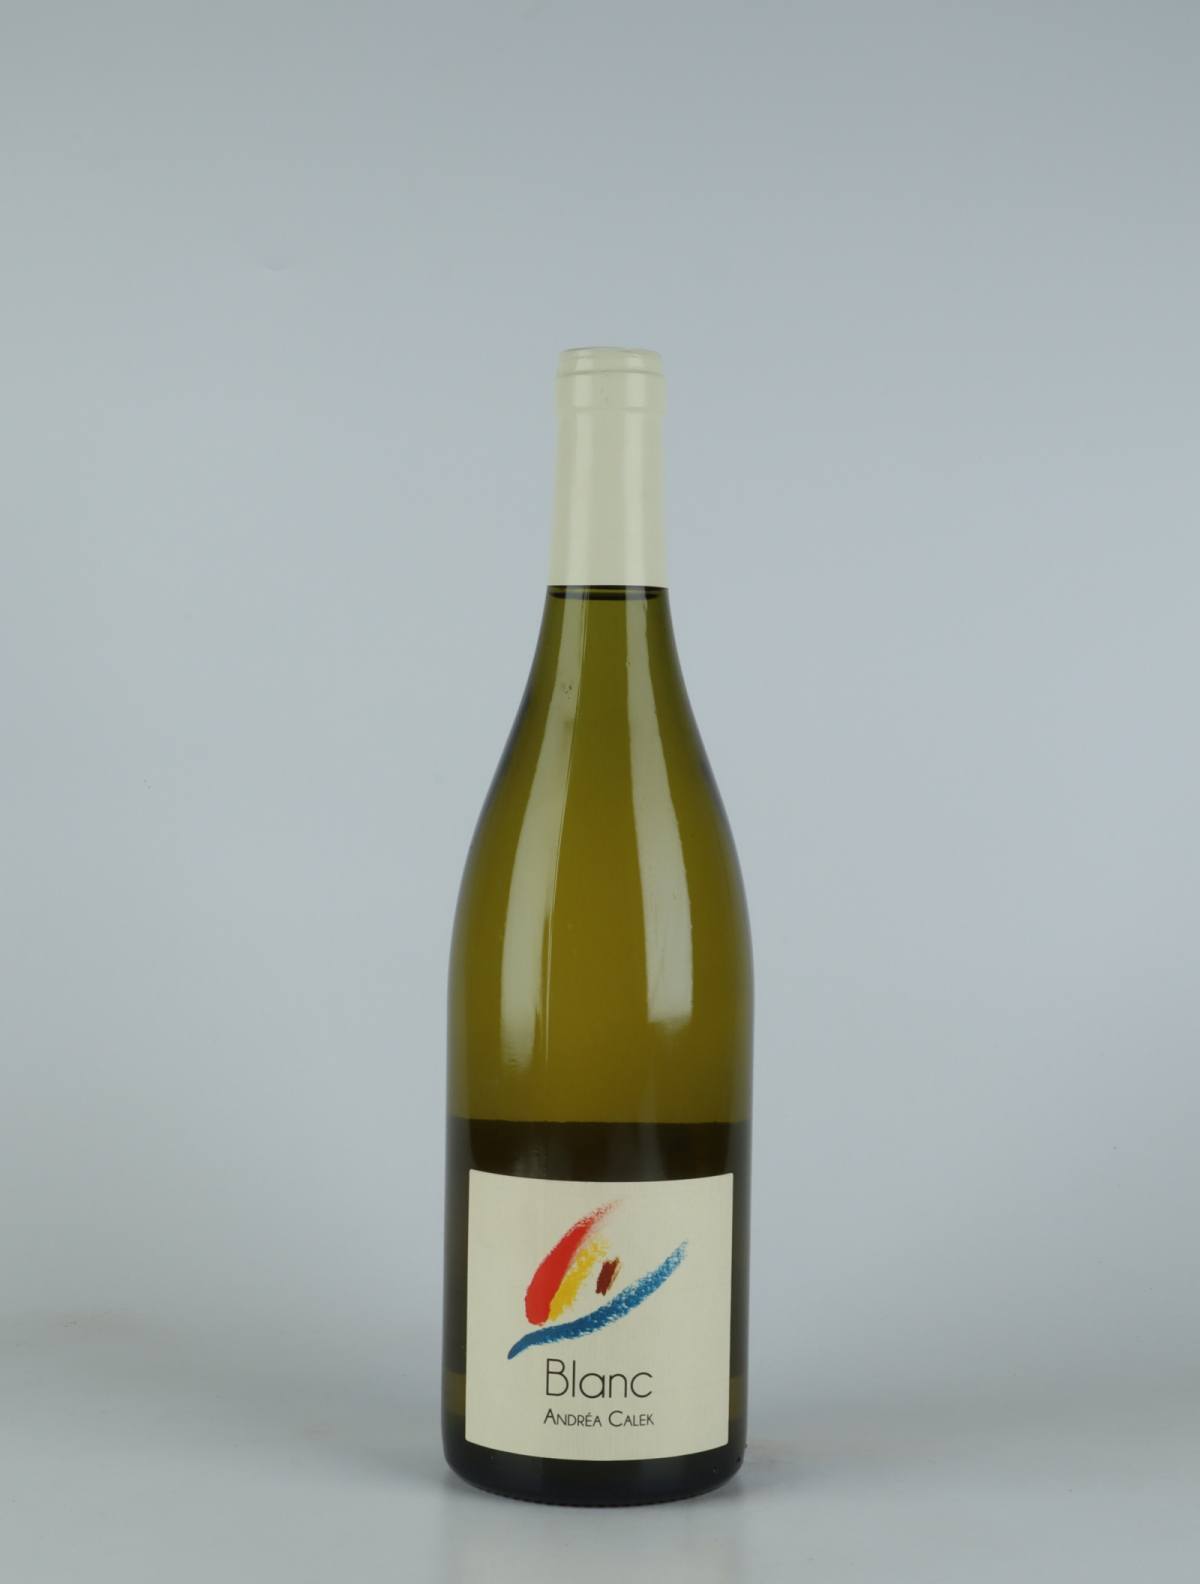 A bottle 2019 Blanc White wine from Andrea Calek, Ardèche in France